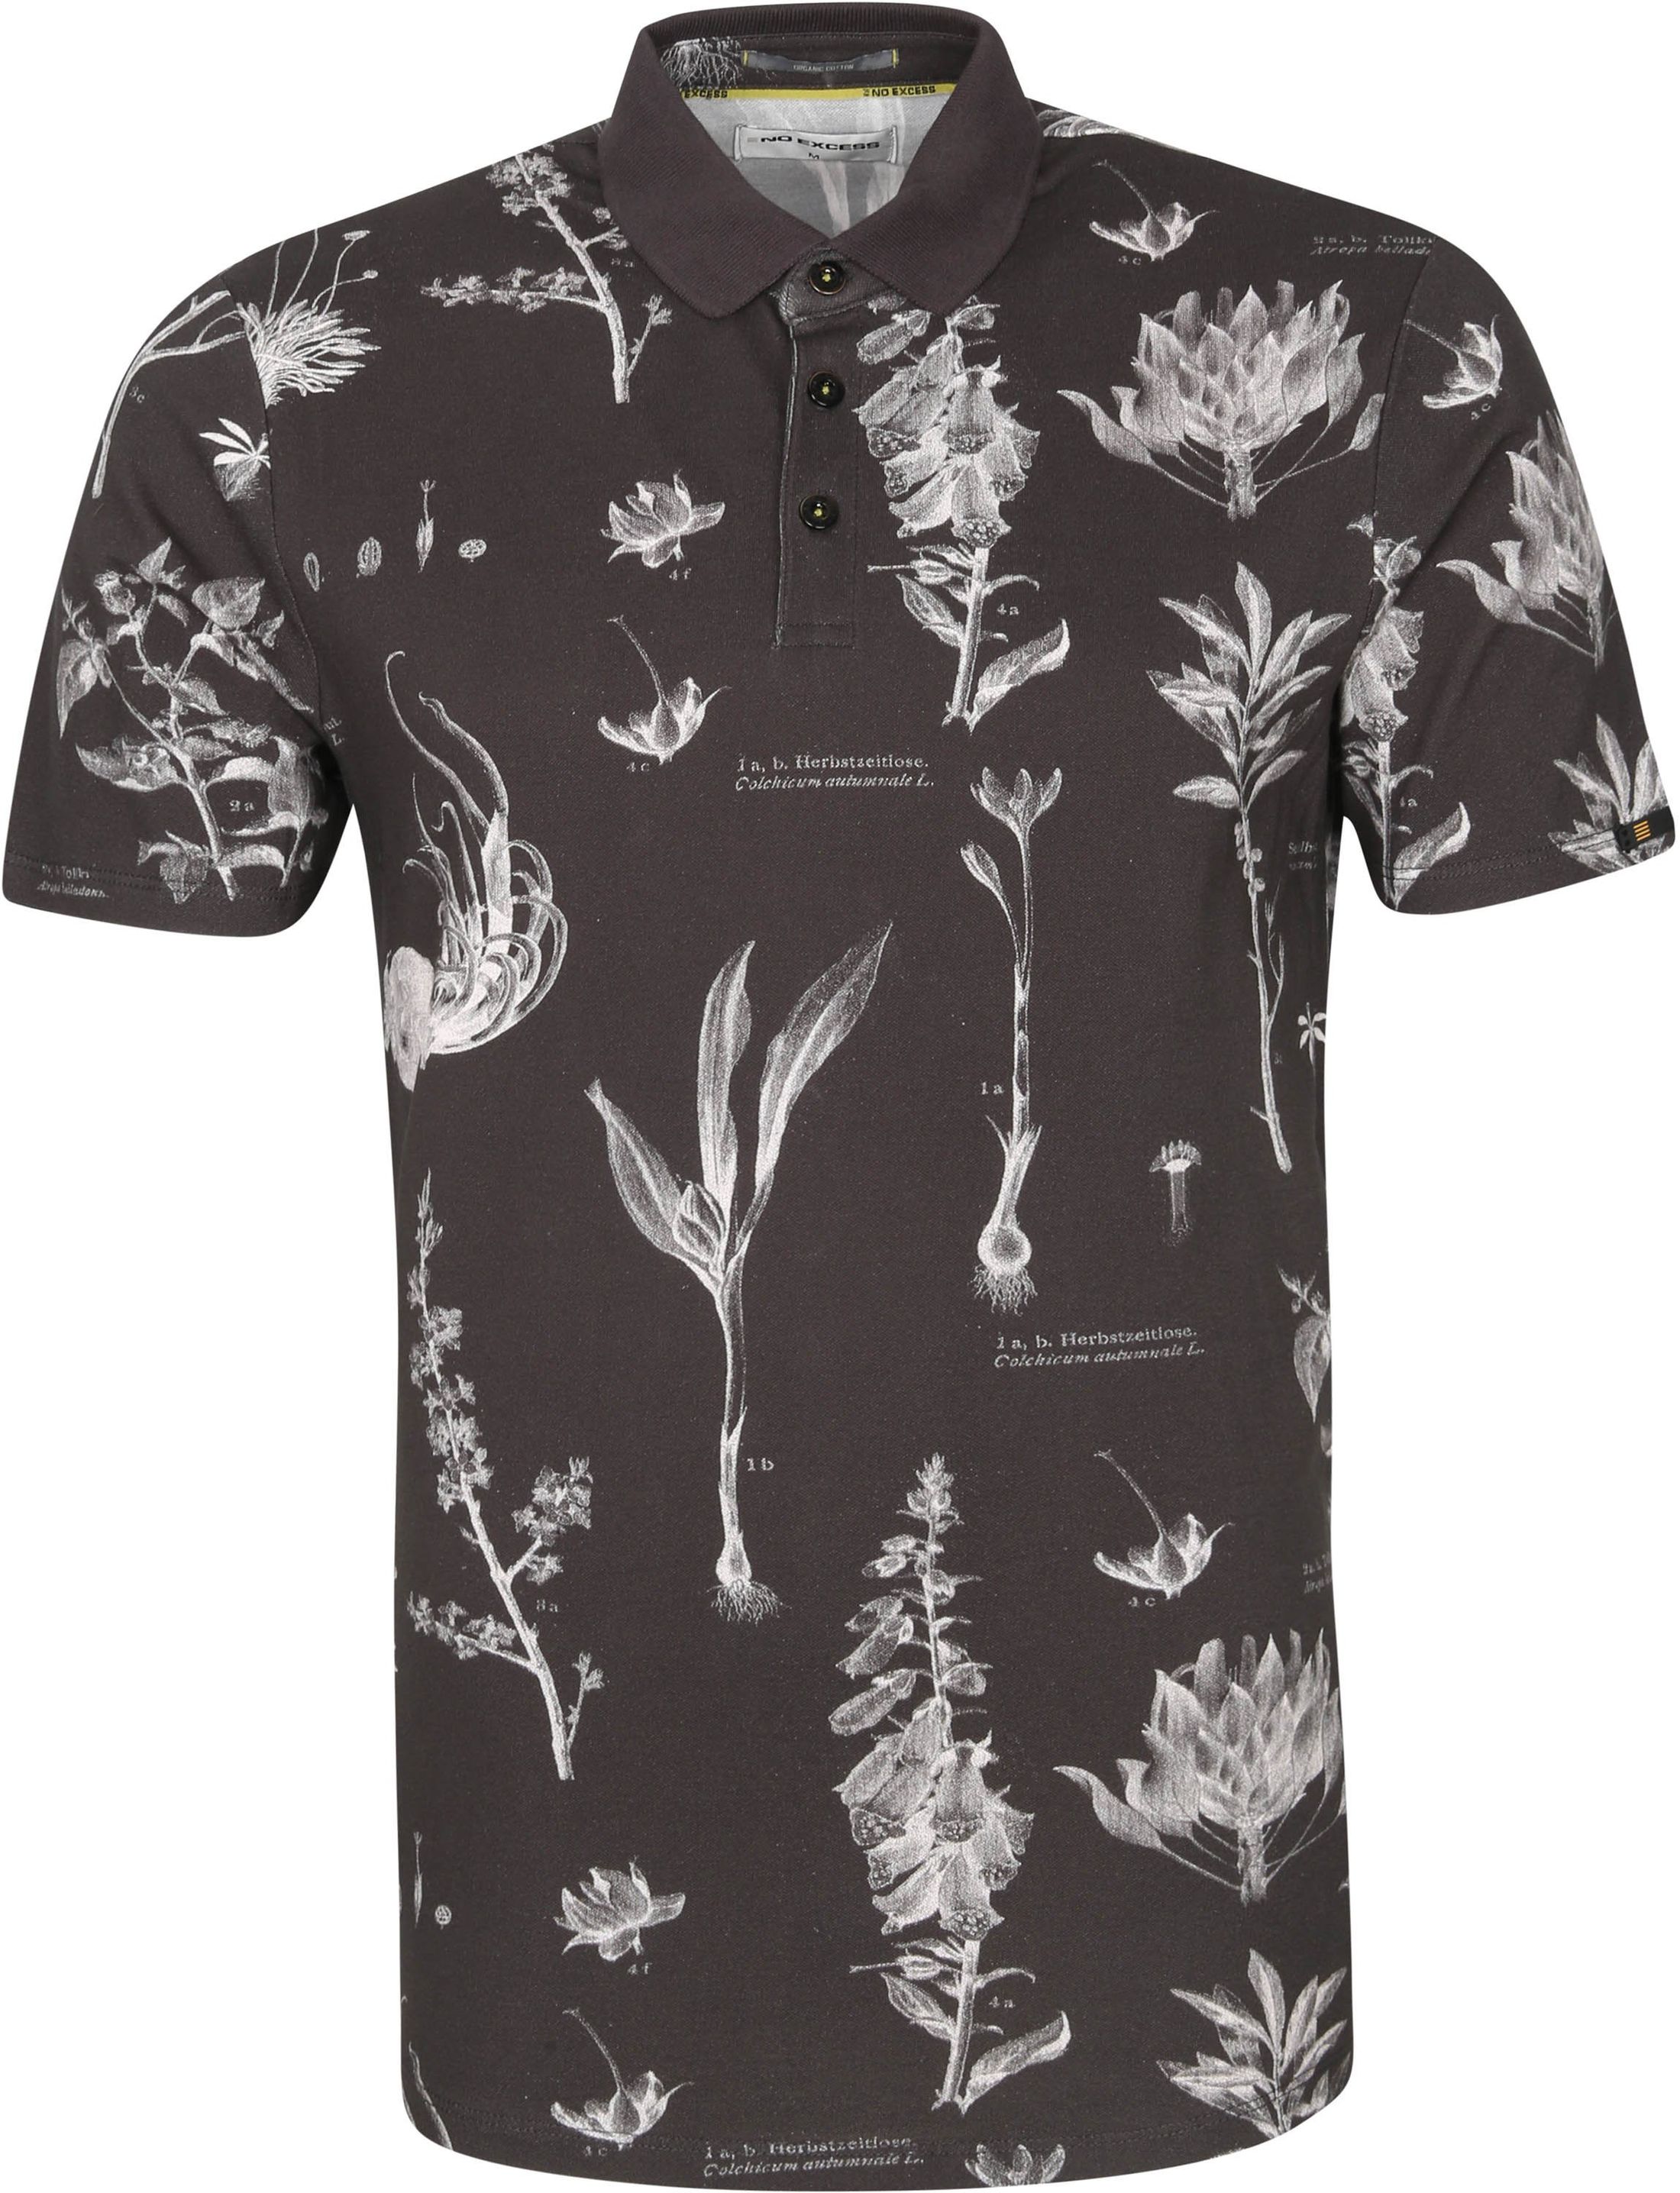 No-Excess Polo Shirt Pique Flowers Black size S